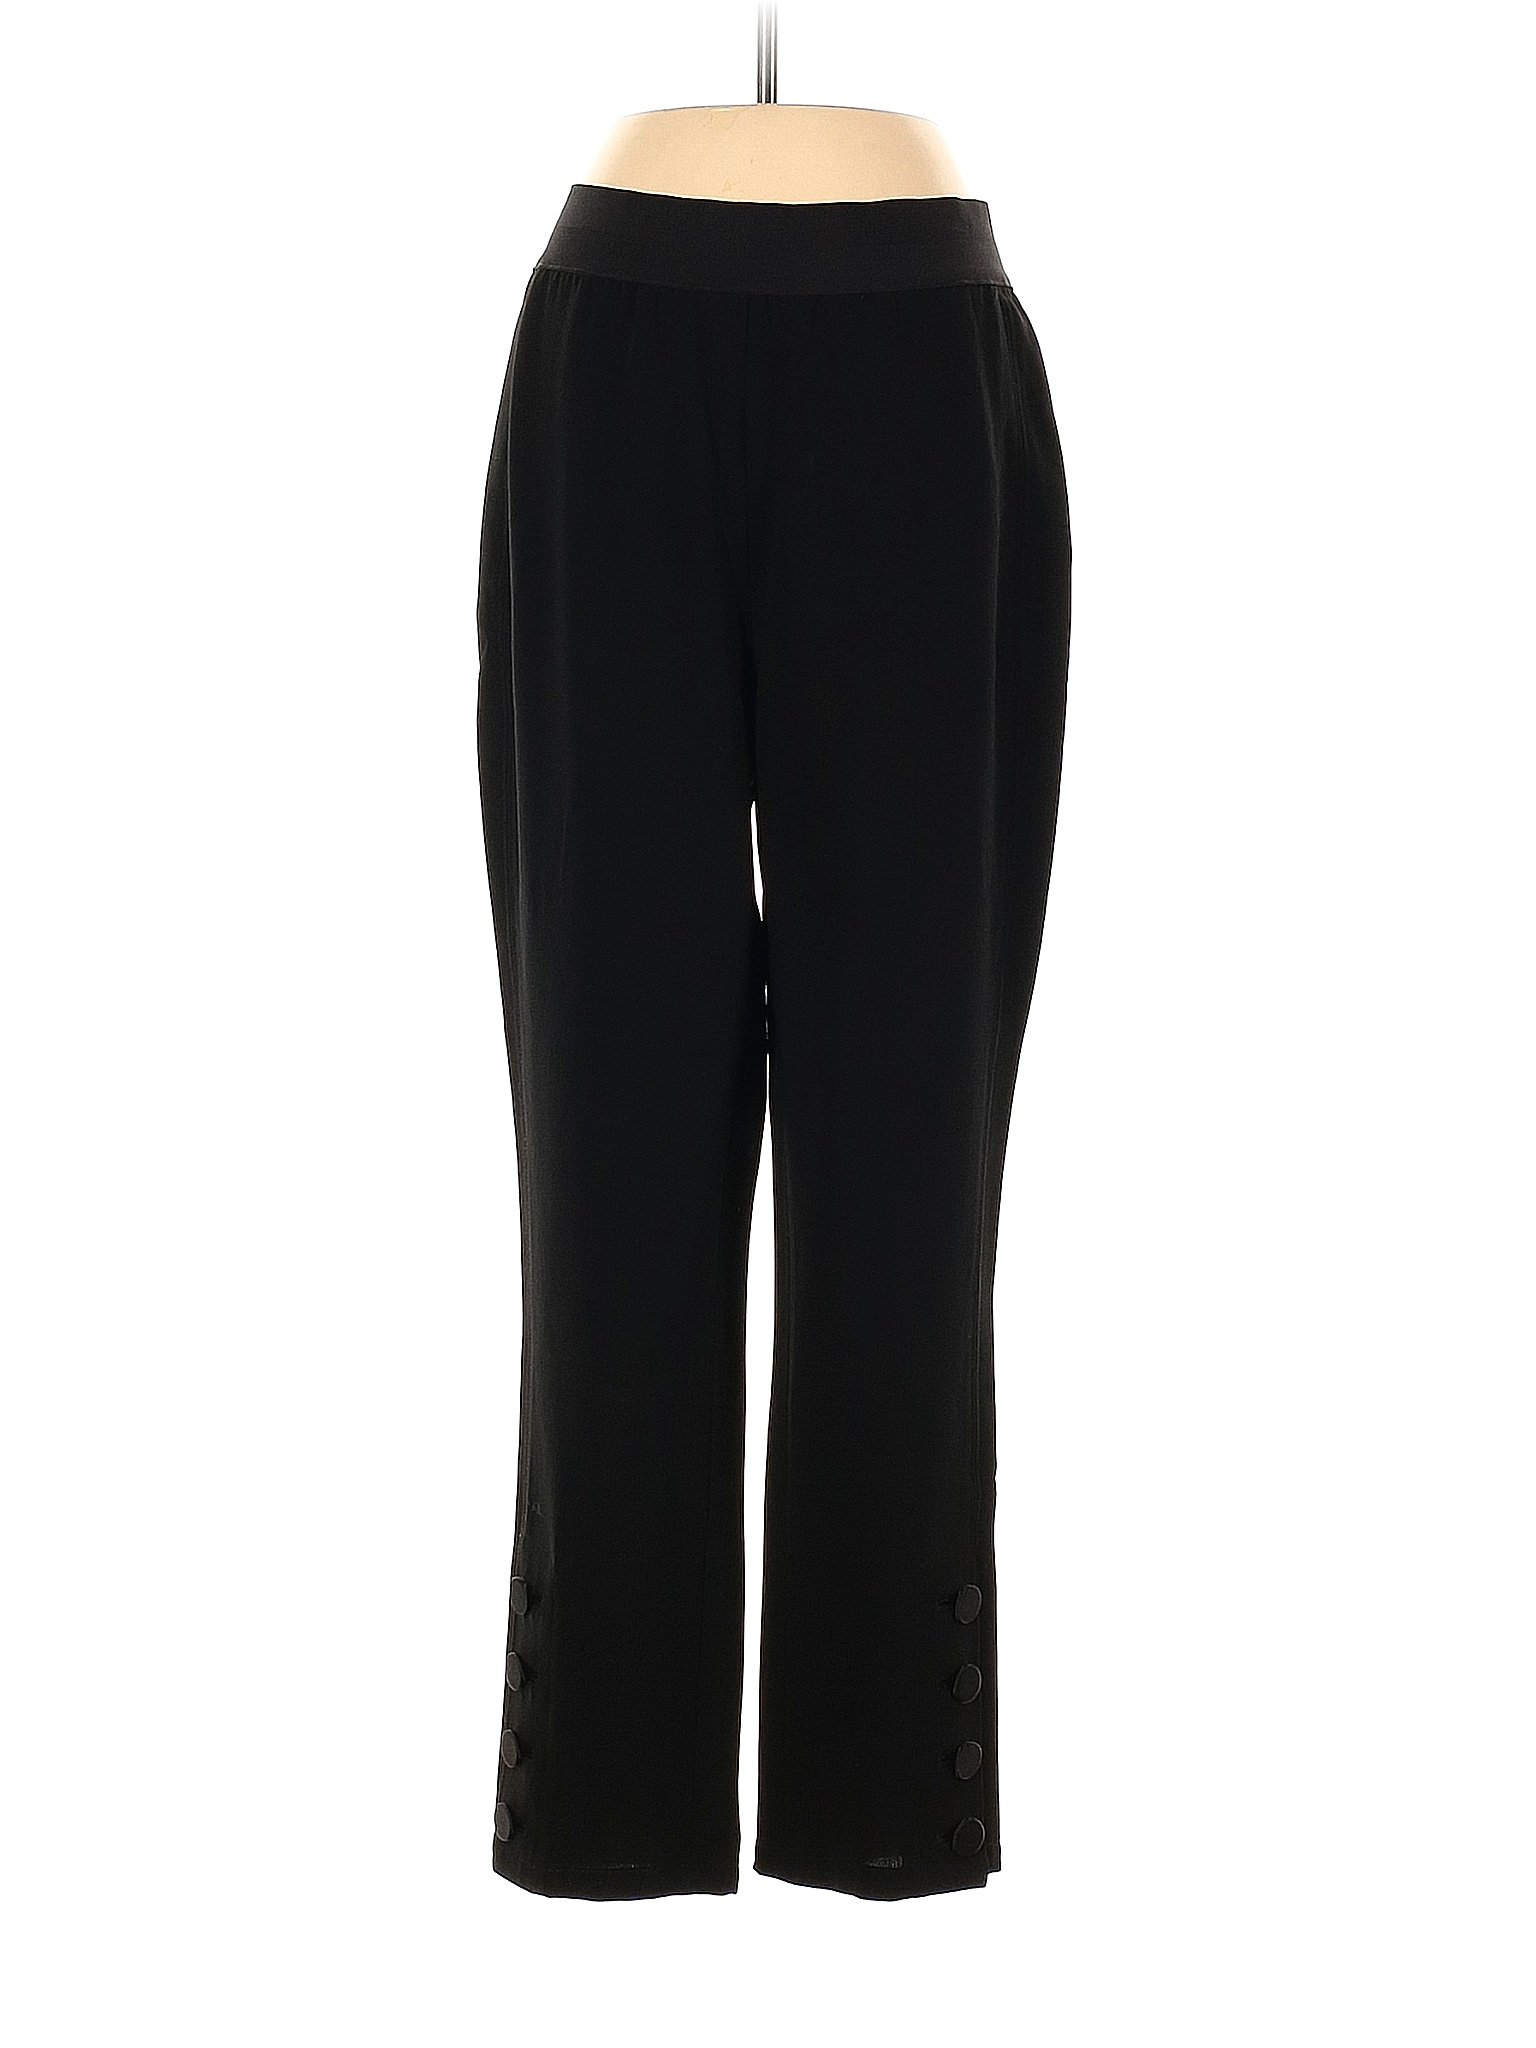 Cinq à Sept Solid Black Tori Pants Size 4 - 91% off | ThredUp